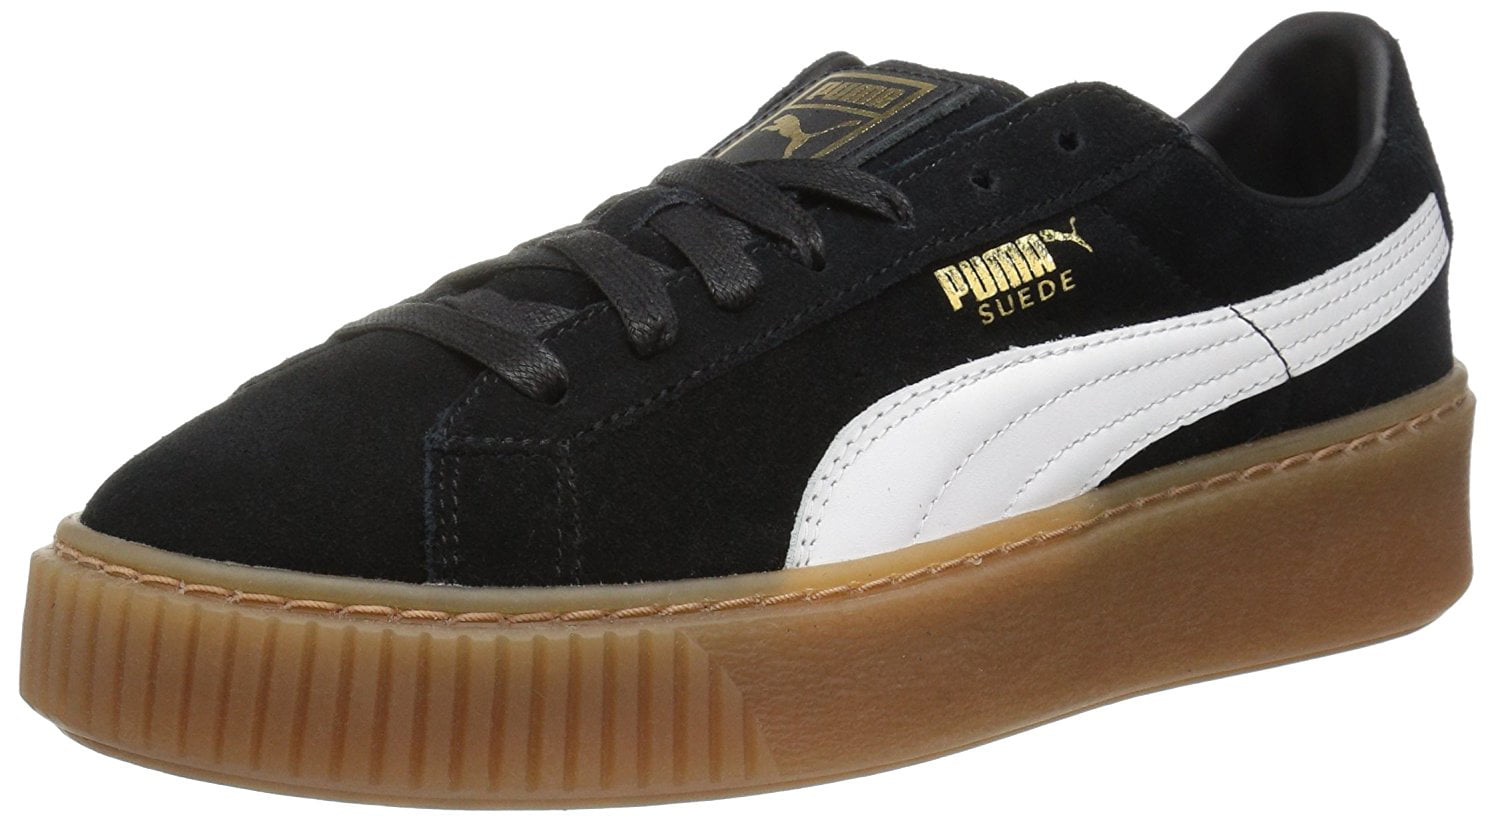 puma suede platform core women's sneakers black/white363559-02 - Walmart.com